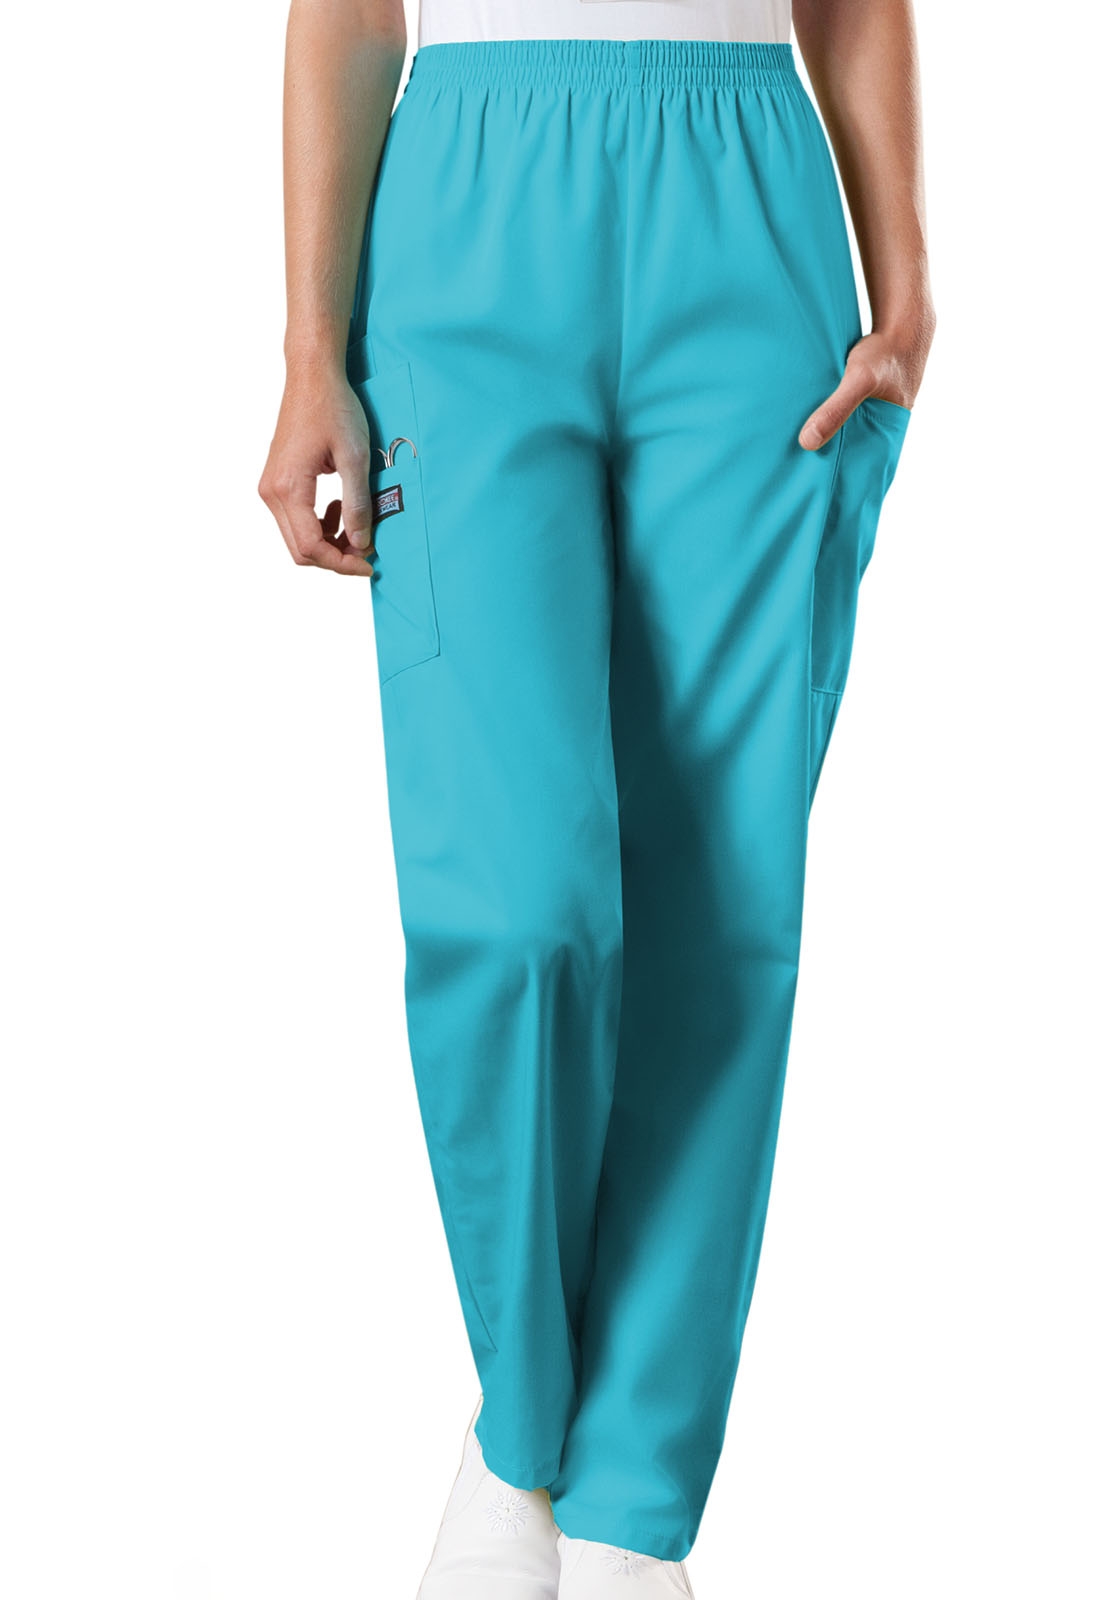 Cherokee WorkWear Originals Women's Elastic Pull On Cargo Scrub Pants-4200 (Turquoise - XXXX-Large)